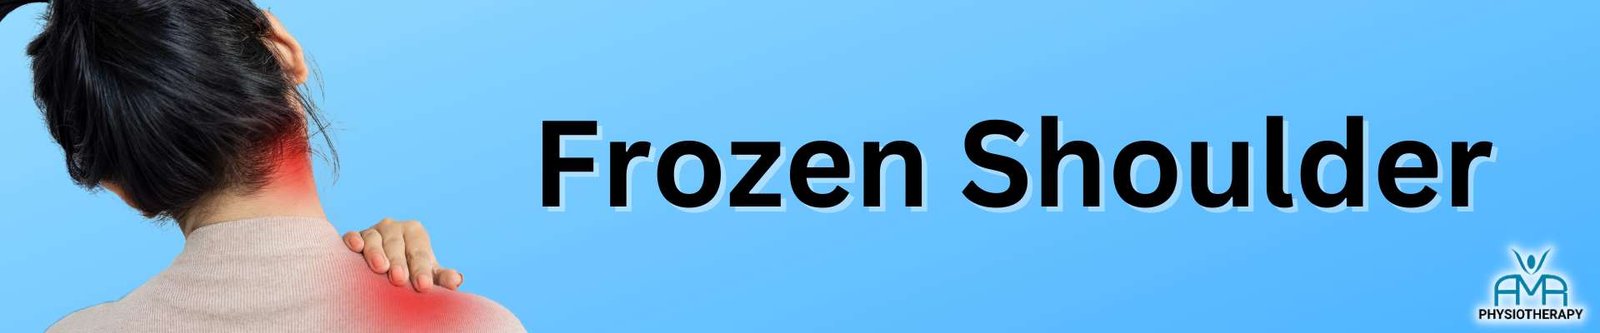 Frozen shoulder rehab in nottingham